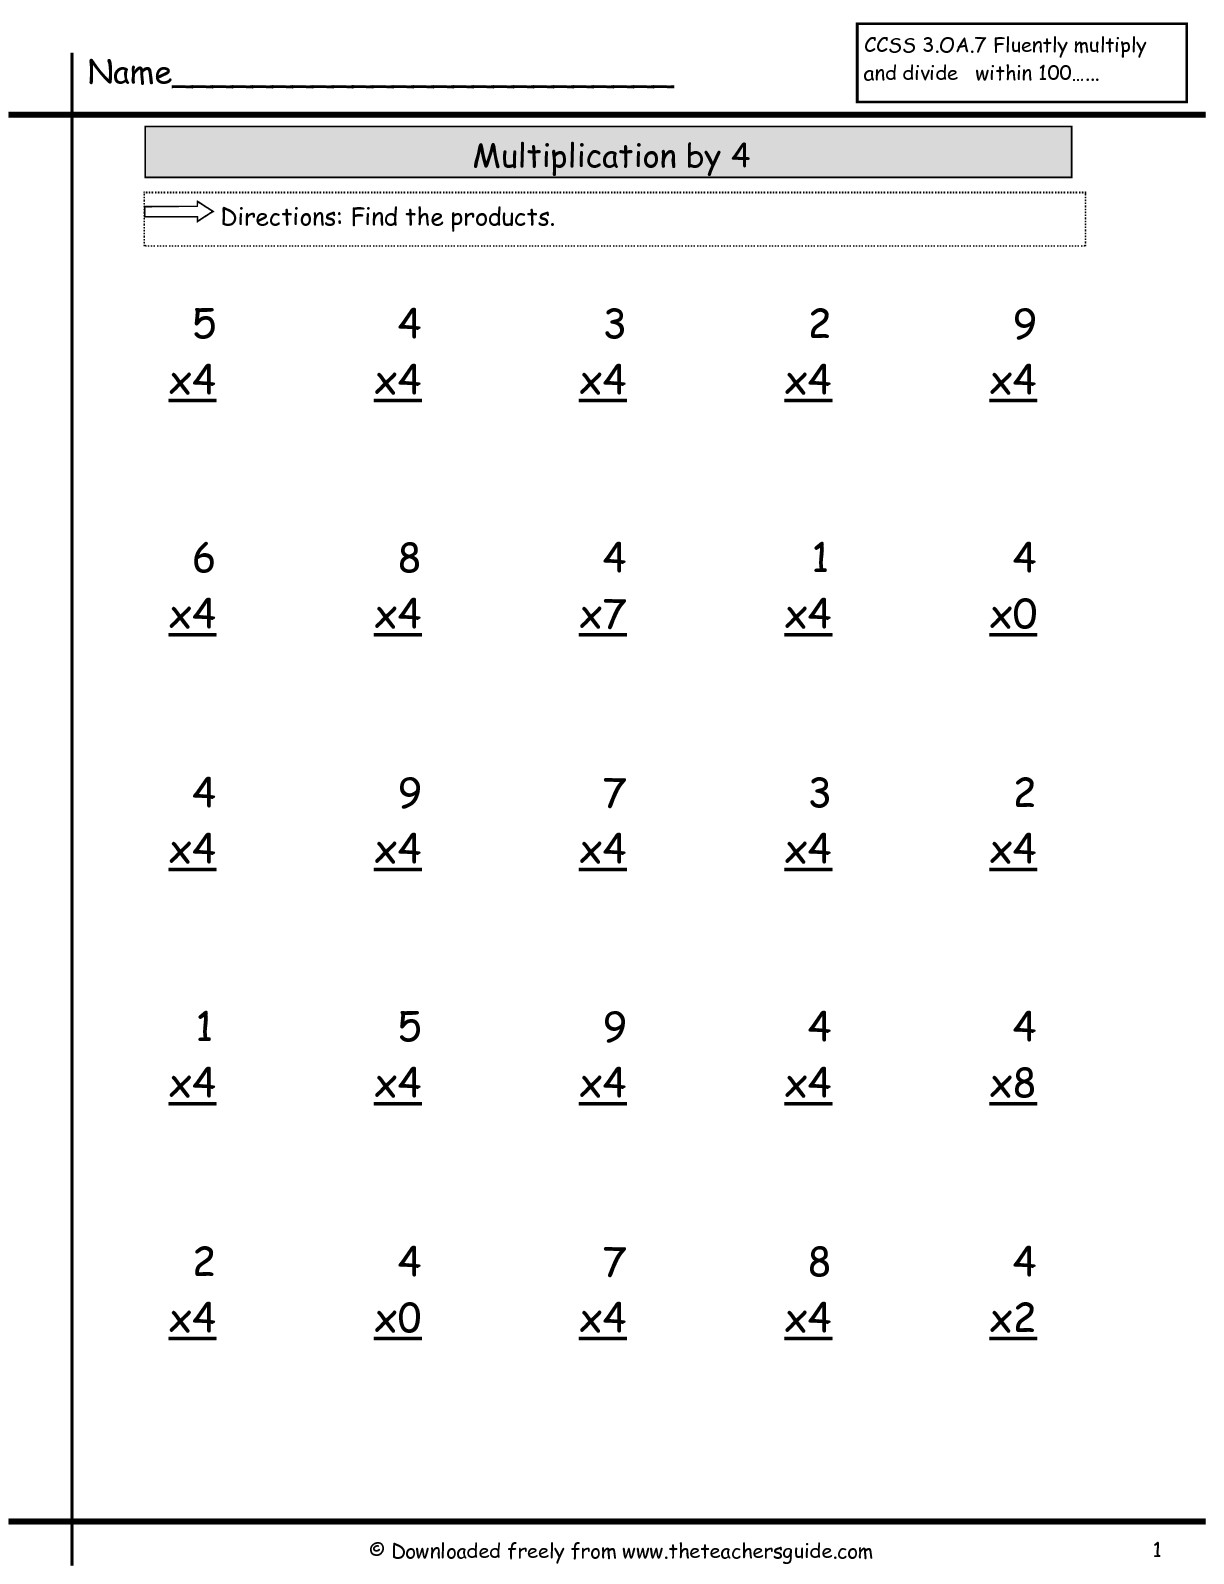 Multiplication Worksheets X4 Printable Multiplication Flash Cards